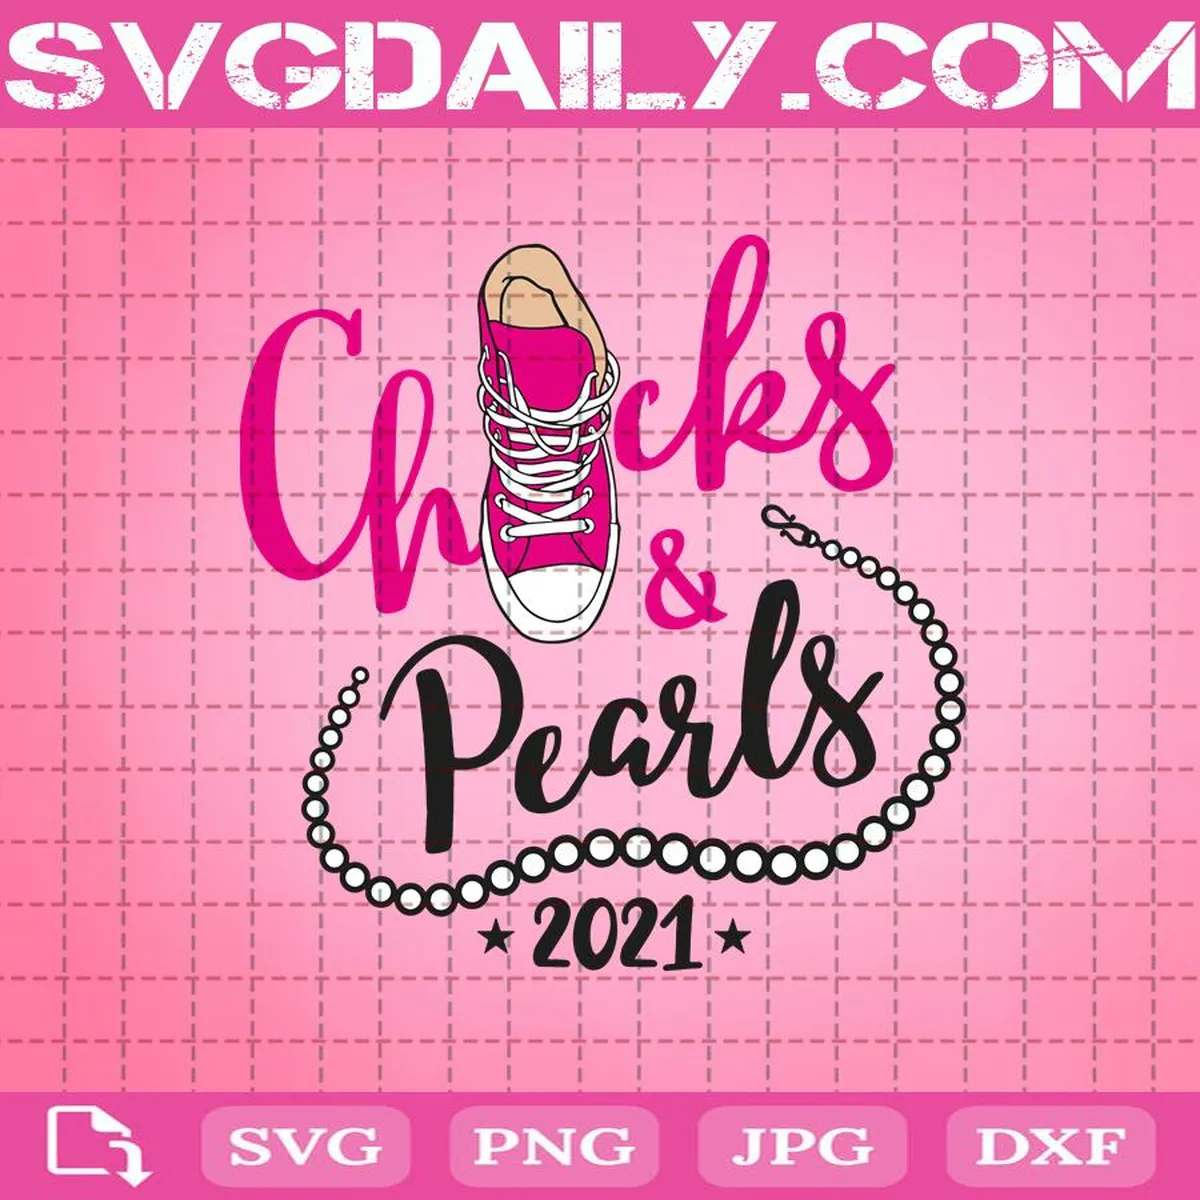 Pink Chuck And Pearls 2021 Kamala Harris Svg, Chuck And Pearls Svg, 2021 Inauguration Day Svg, Shose Svg, Kamala Harris Svg